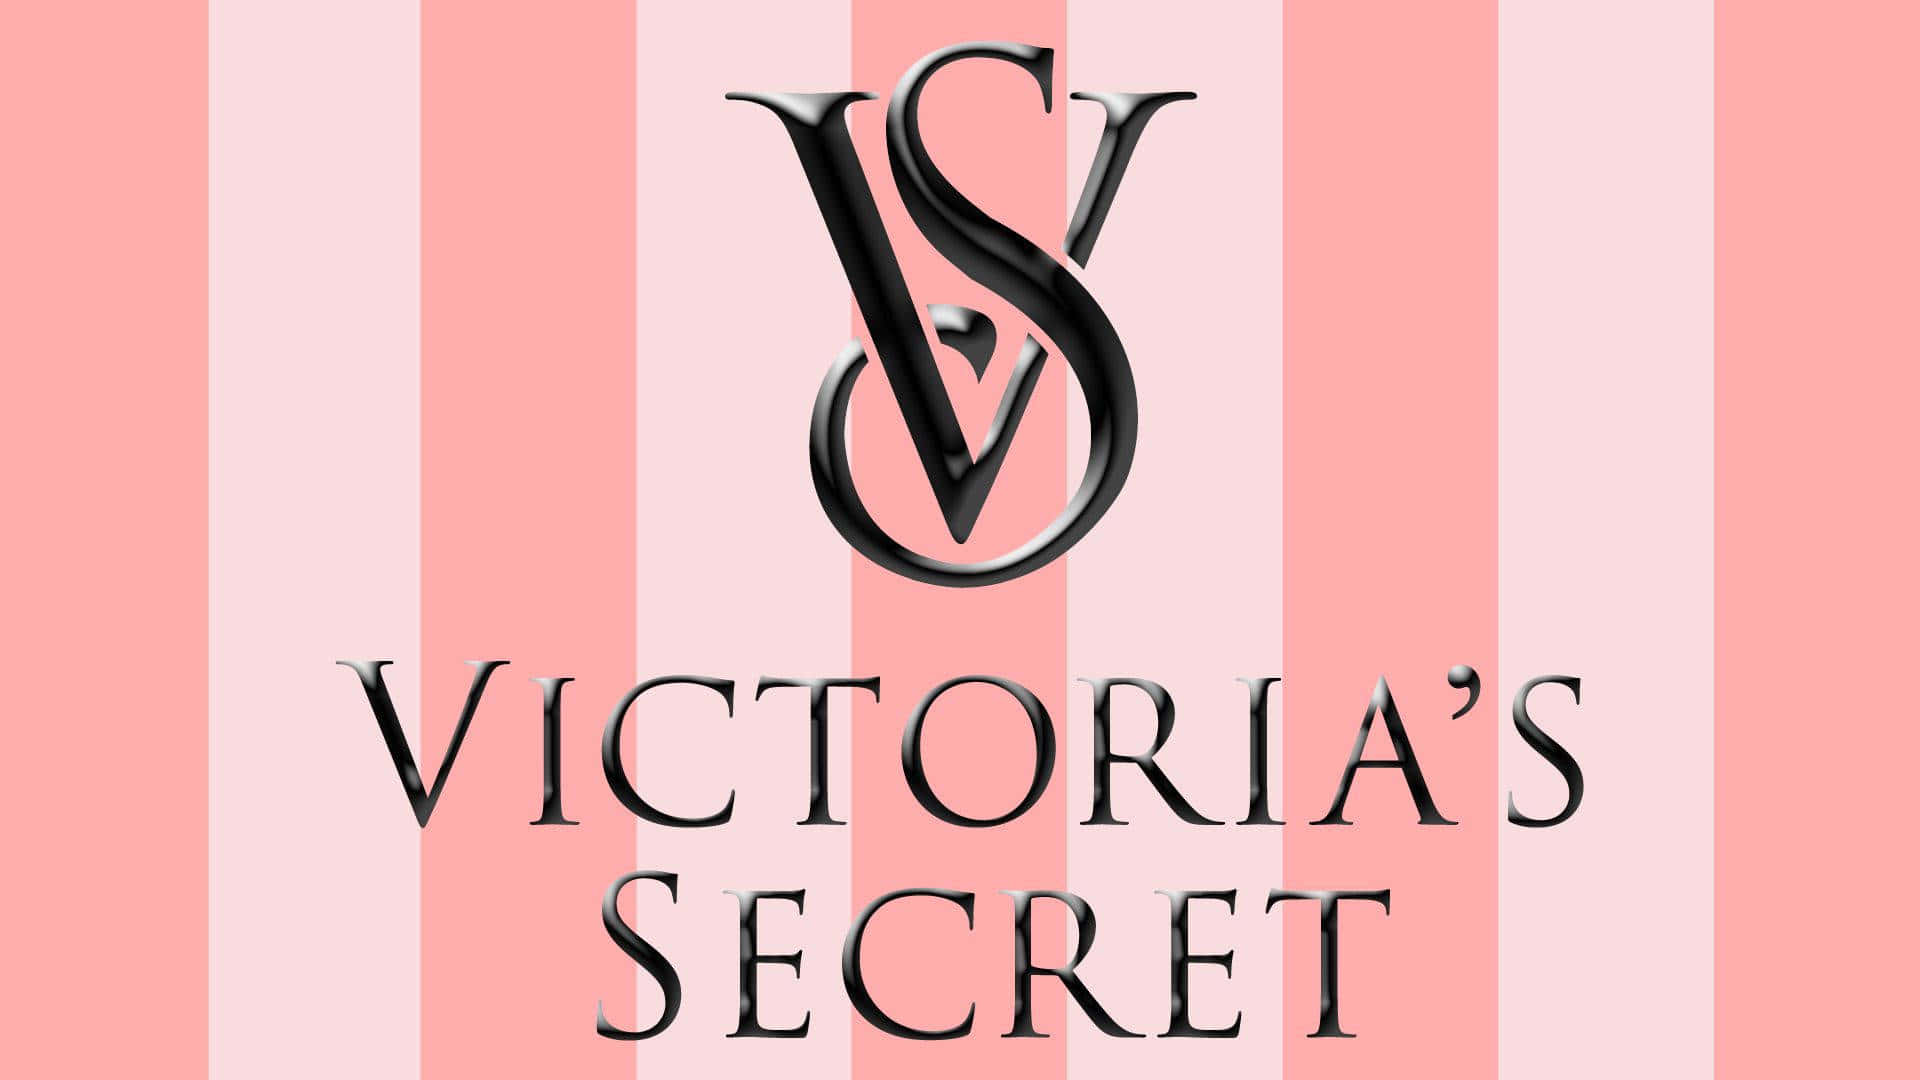 Plano De Fundo De Victoria Secret